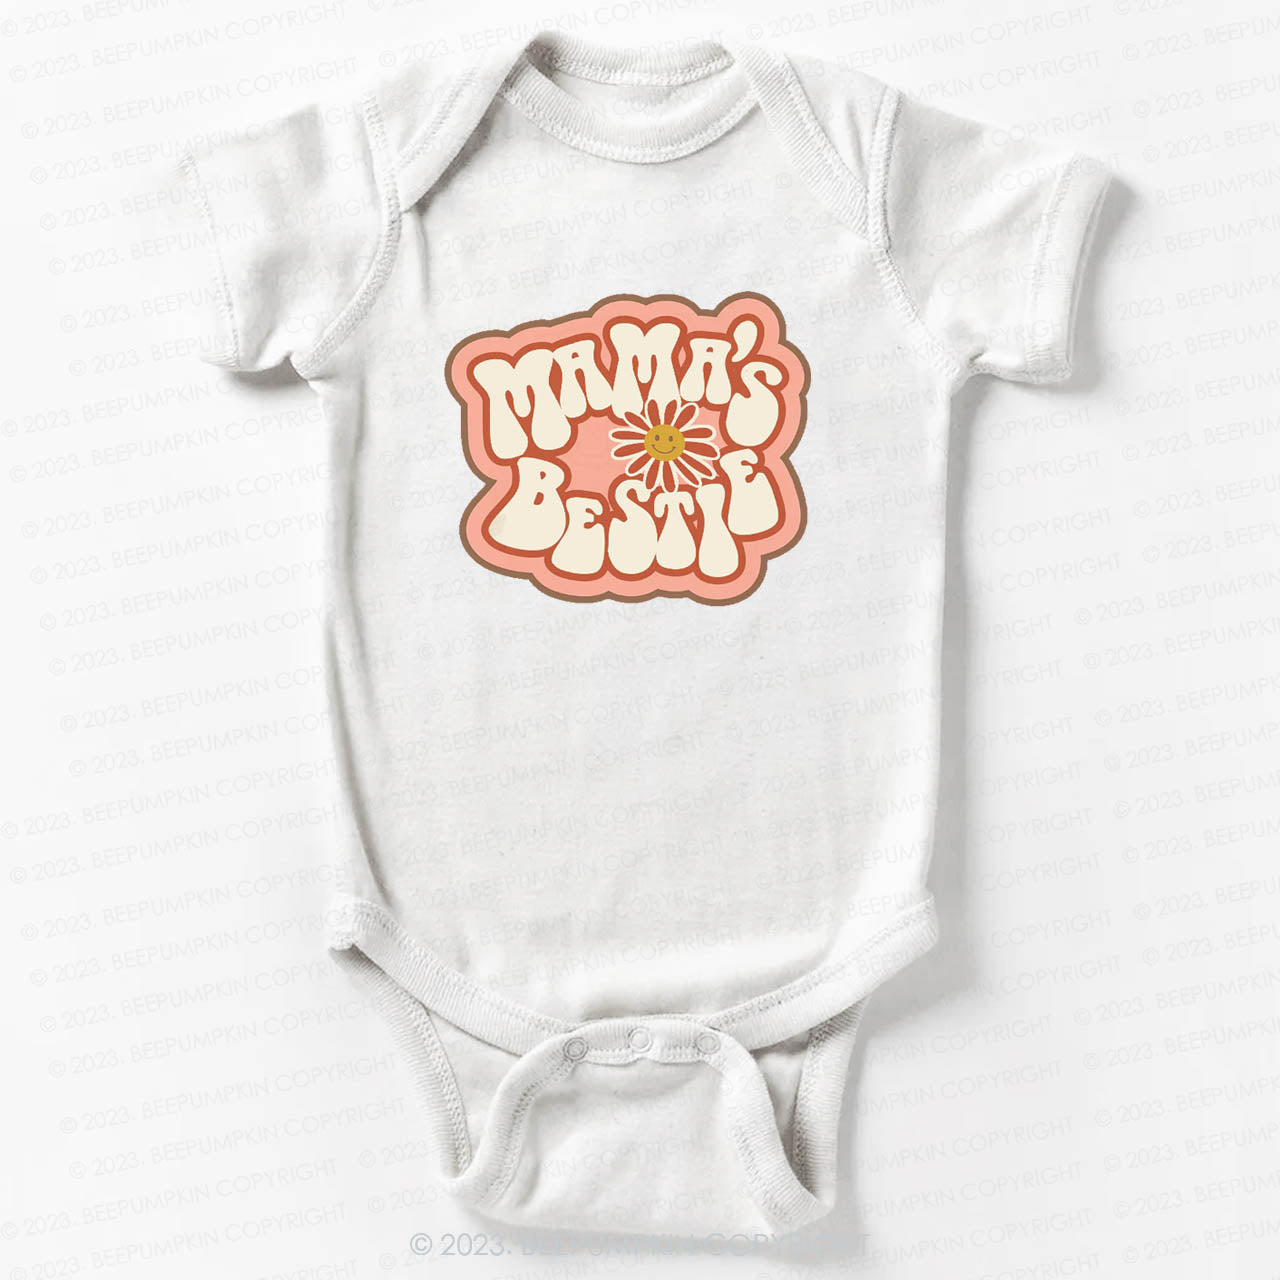 Mama's Bestie Sunflower Bodysuit For Baby